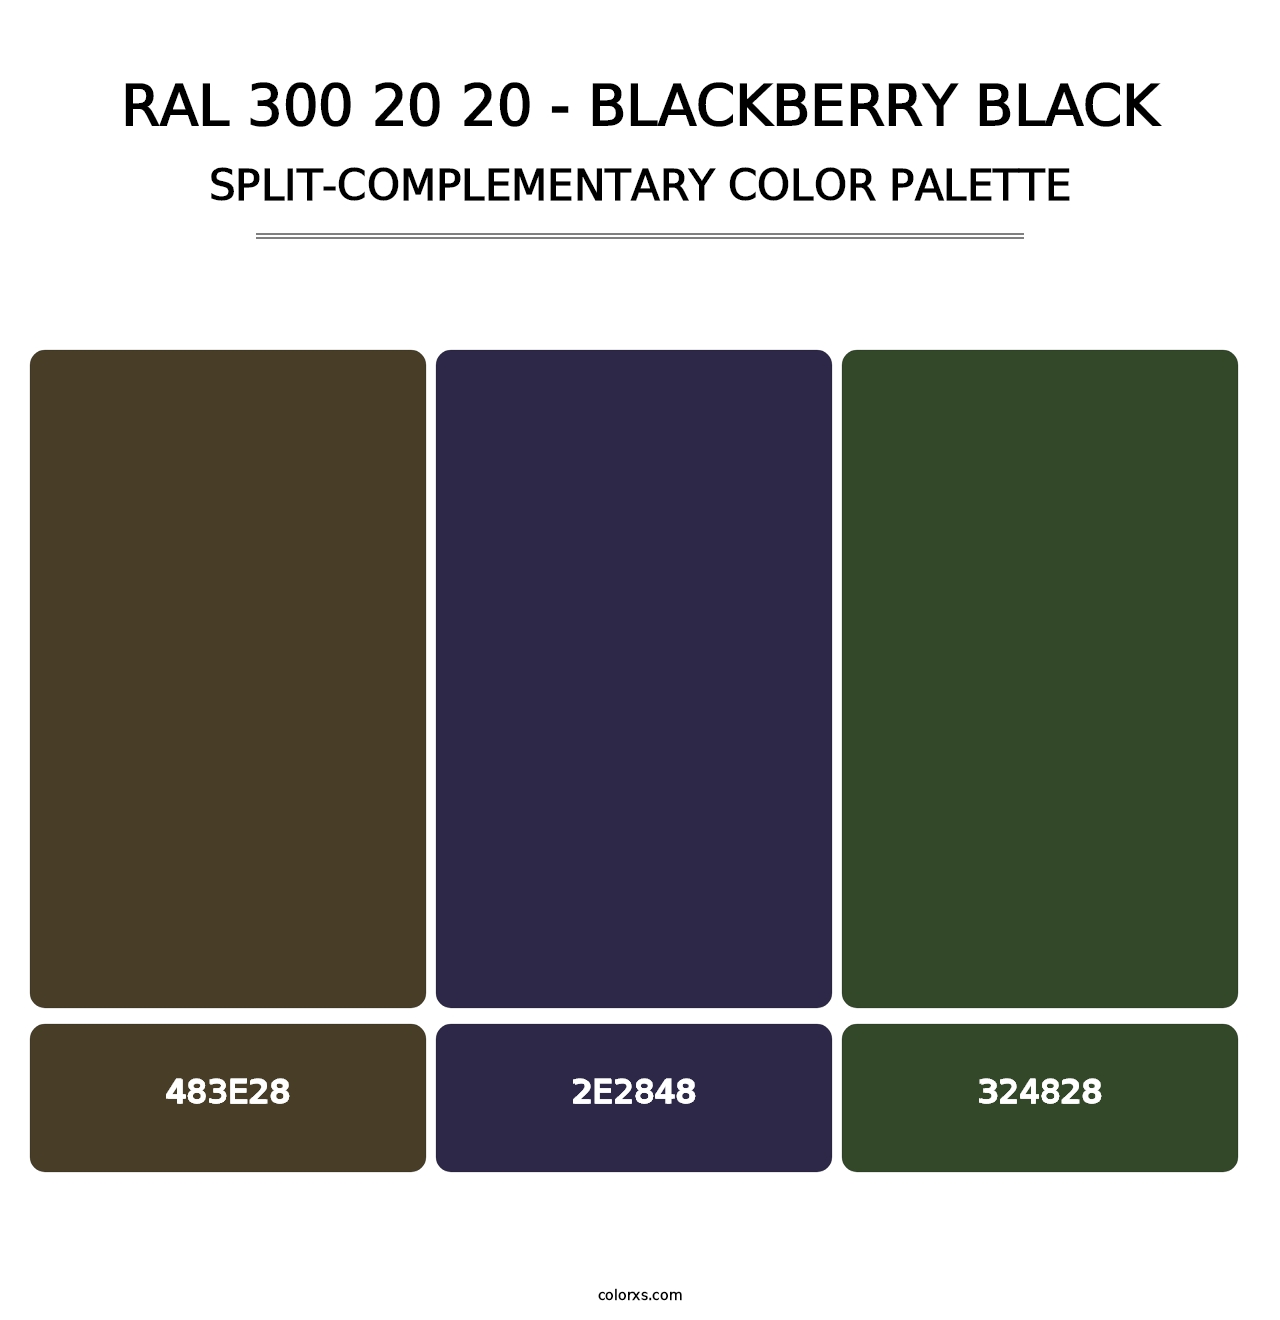 RAL 300 20 20 - Blackberry Black - Split-Complementary Color Palette